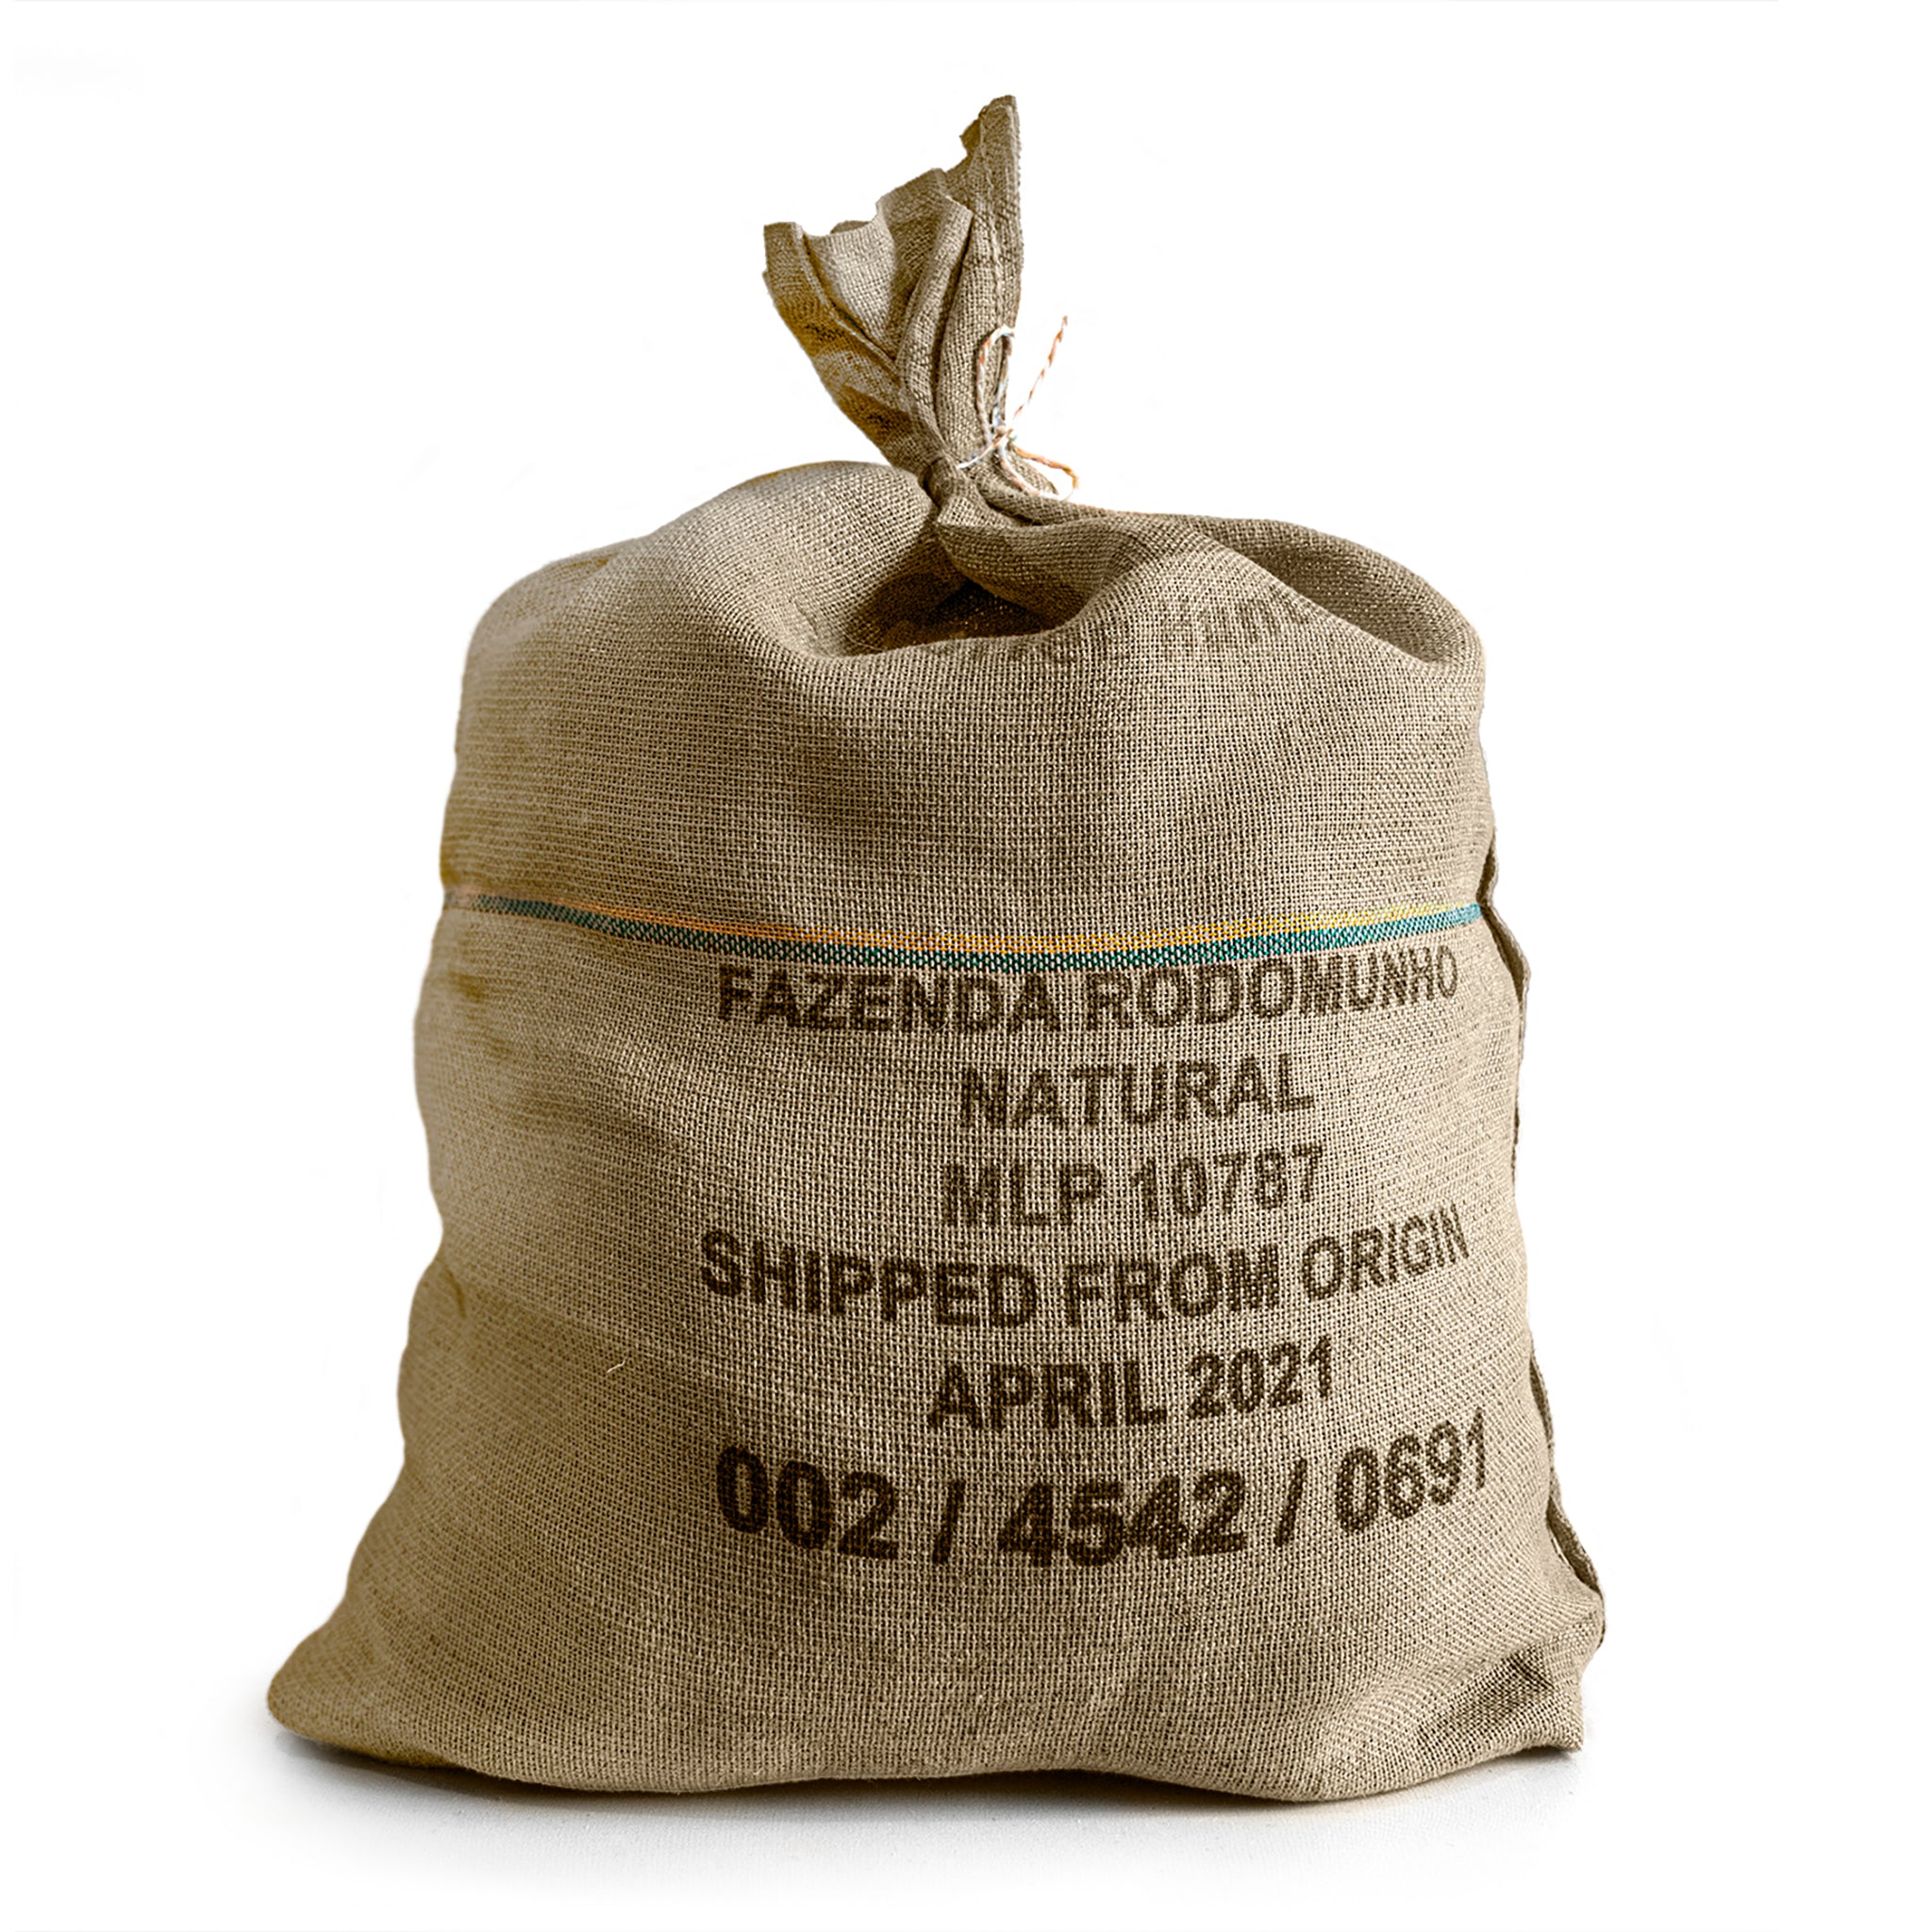 3kg sack of wool shillies